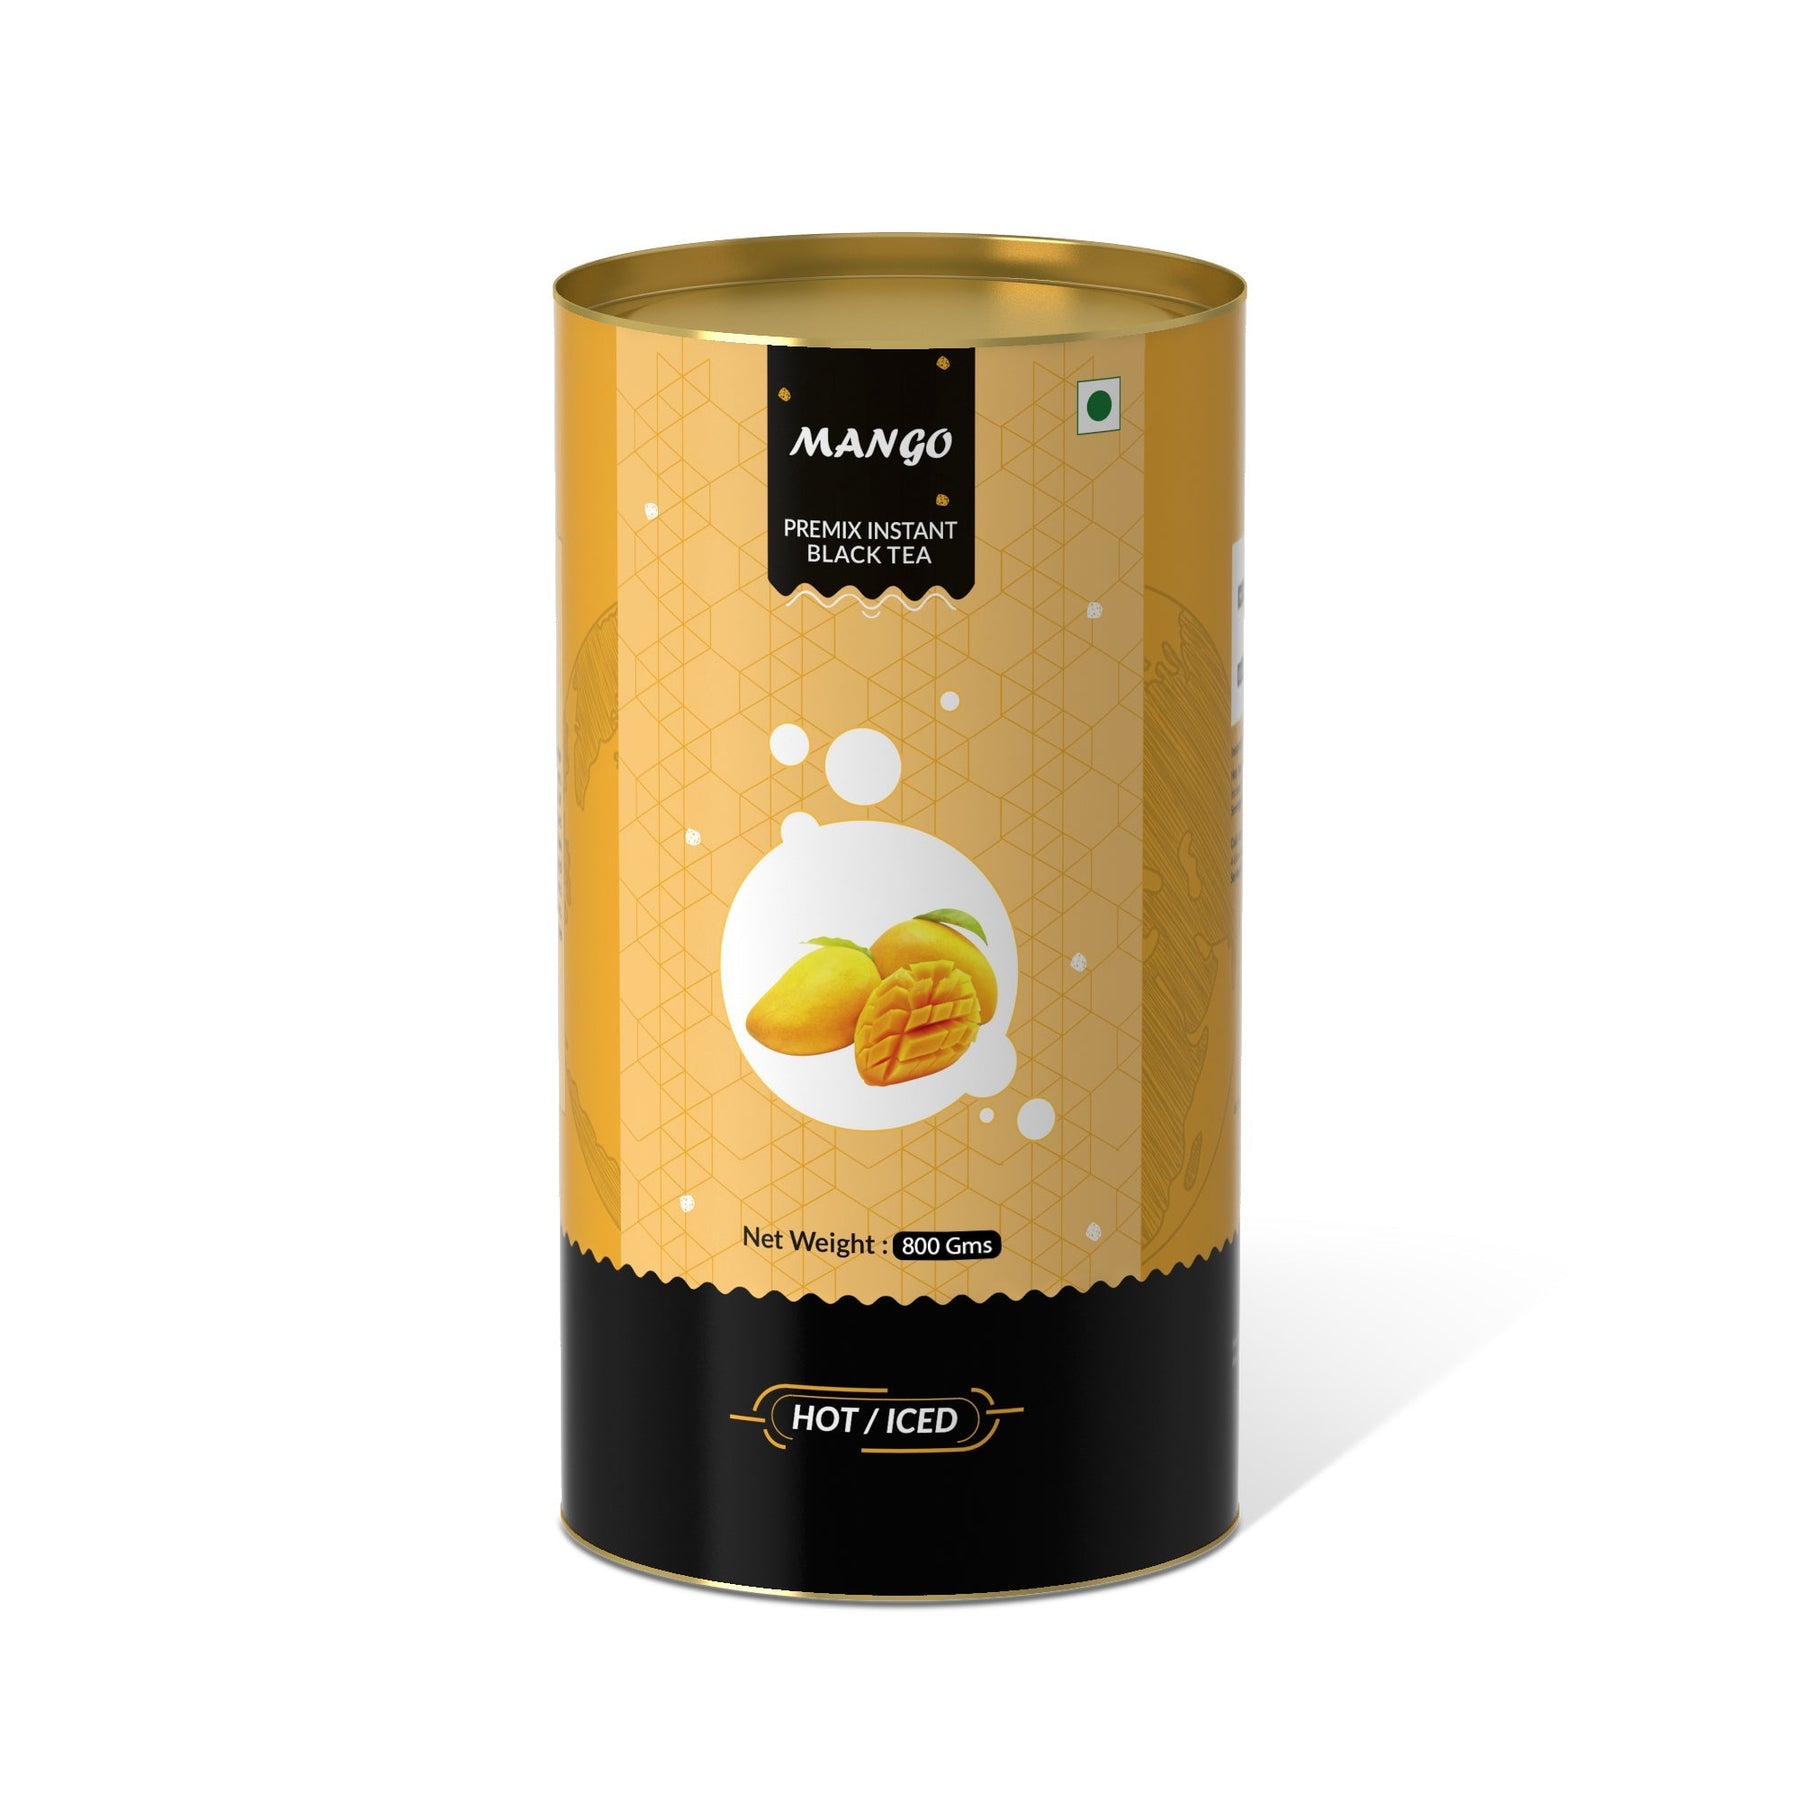 Mango Flavored Instant Black Tea - 800 gms